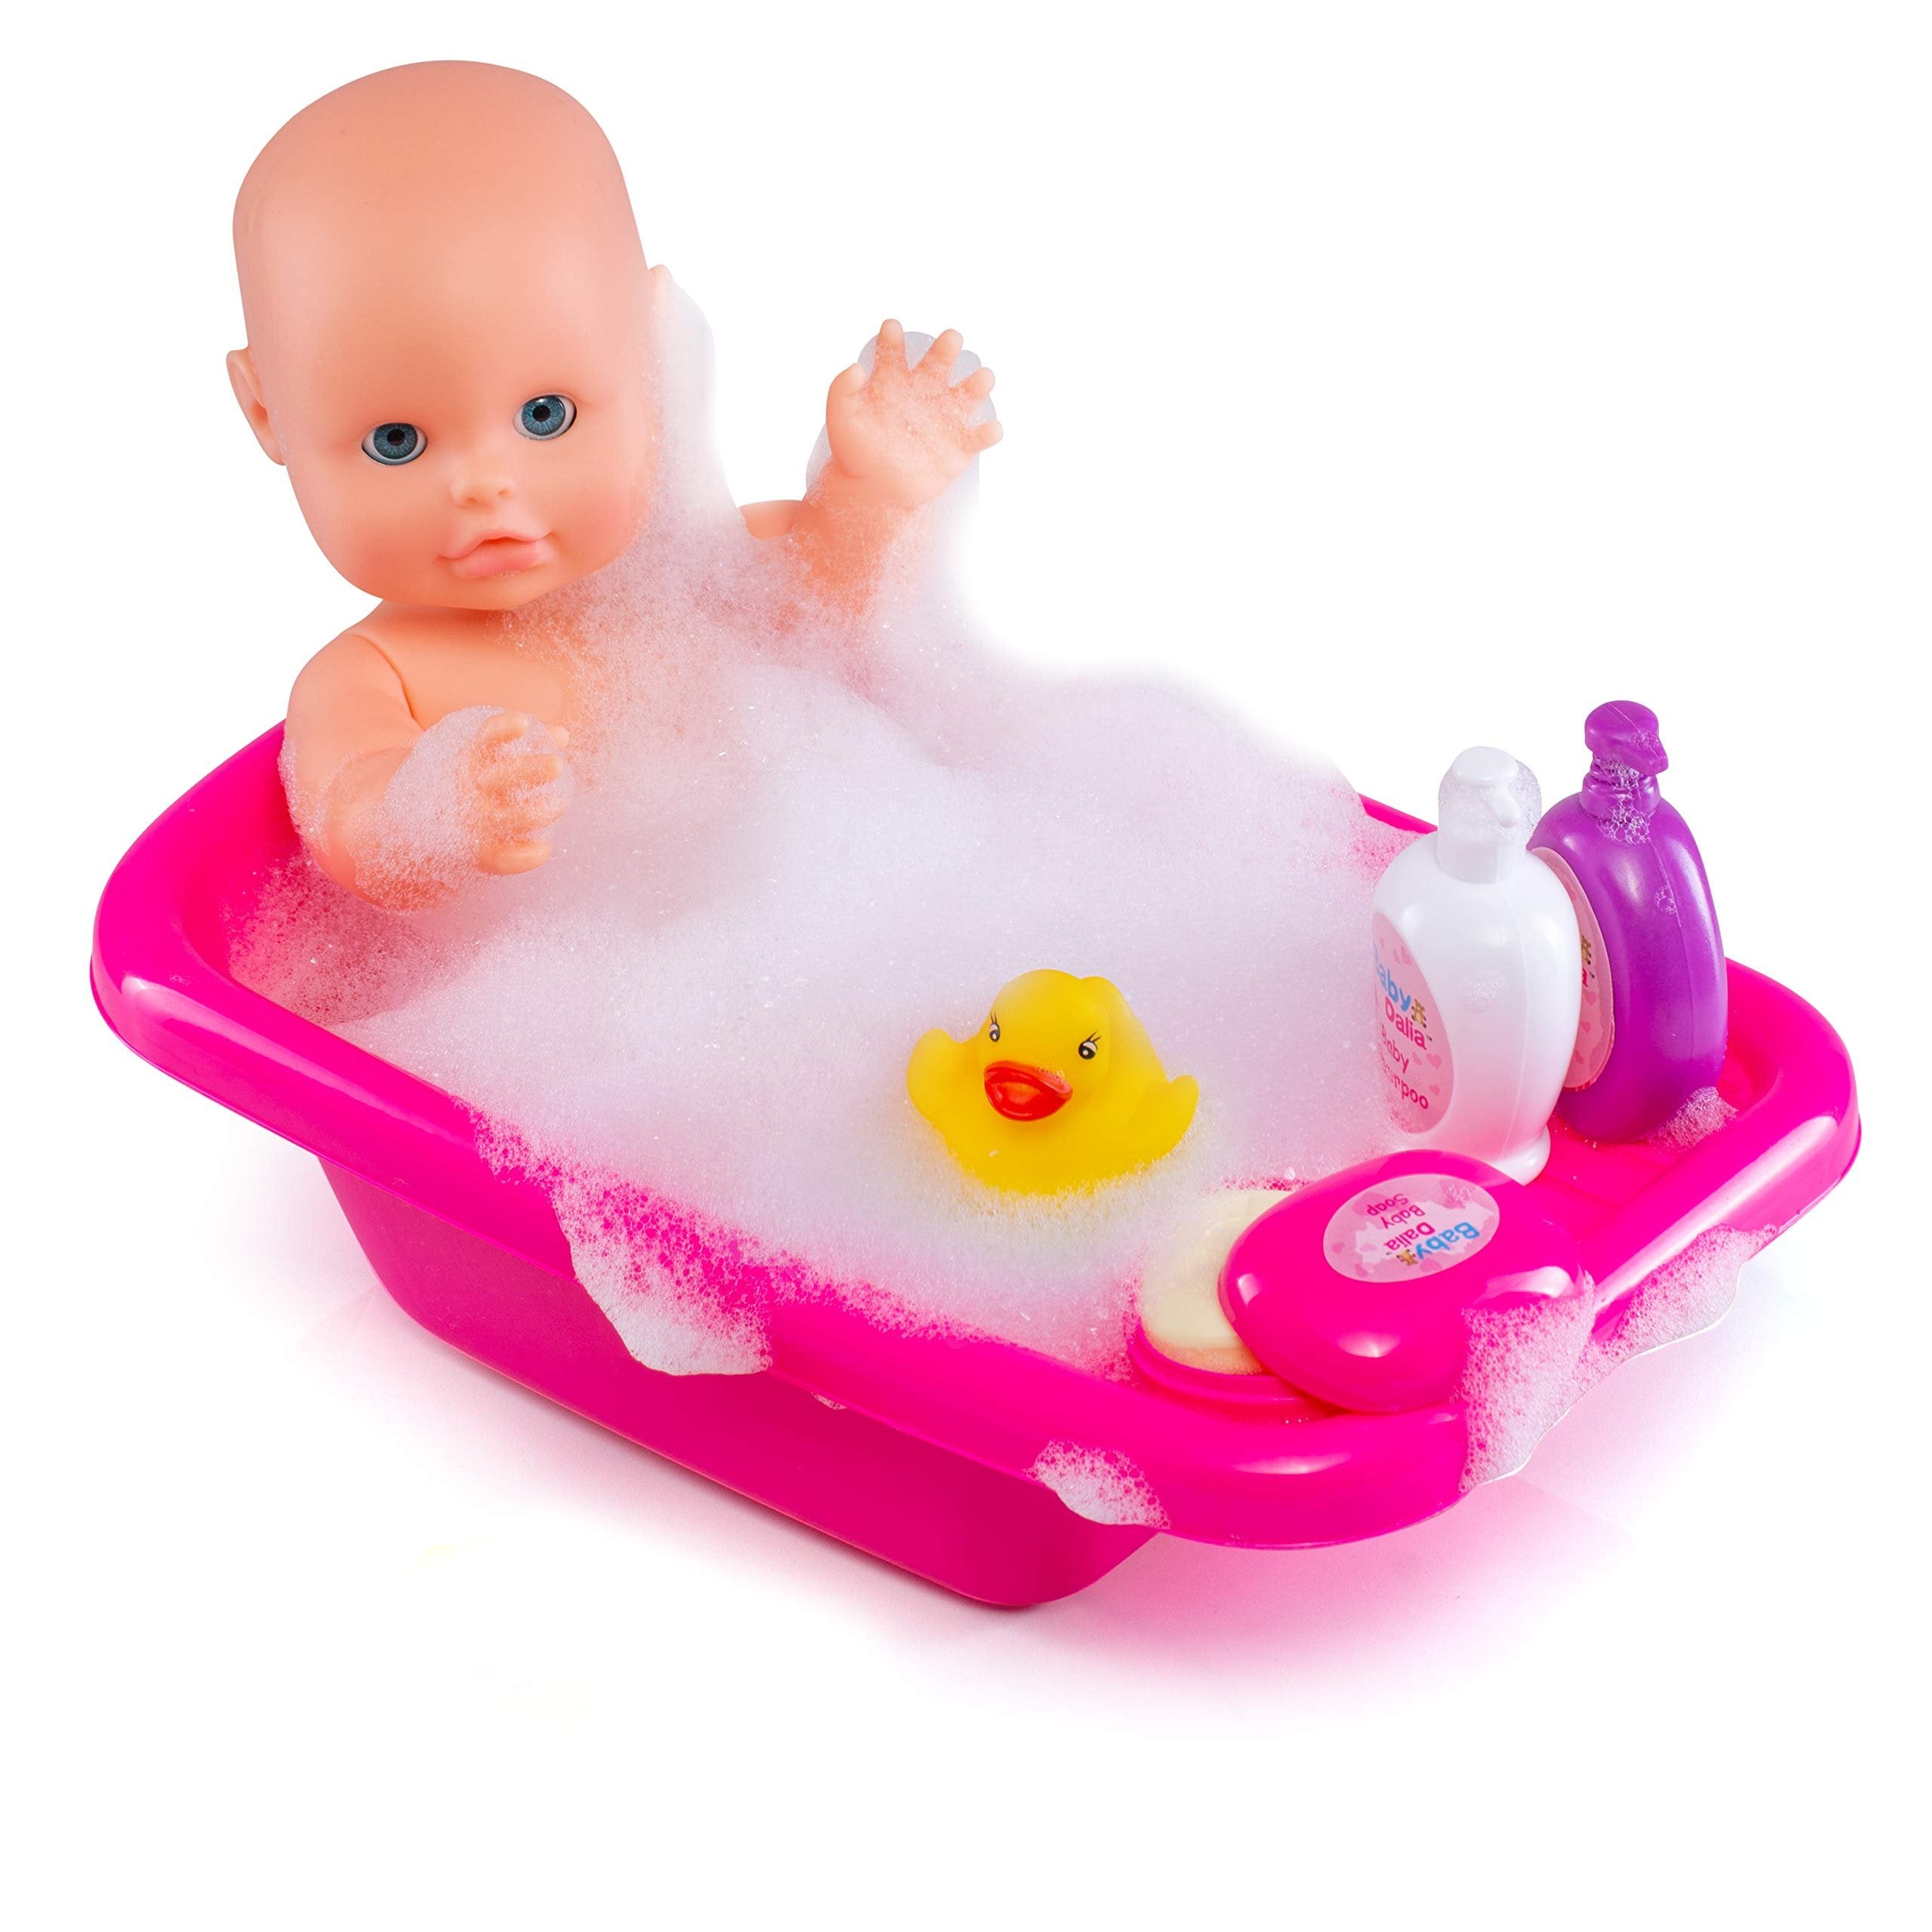 PREXTEX 8 Piece Baby Doll Bathtub Set with Doll, Crib-Shaped Bathtub, Robe and Bath Toys Accessories - Baby Dalia Dolls Bathing Gift Toy Alive-Like Set for Boys and Girls